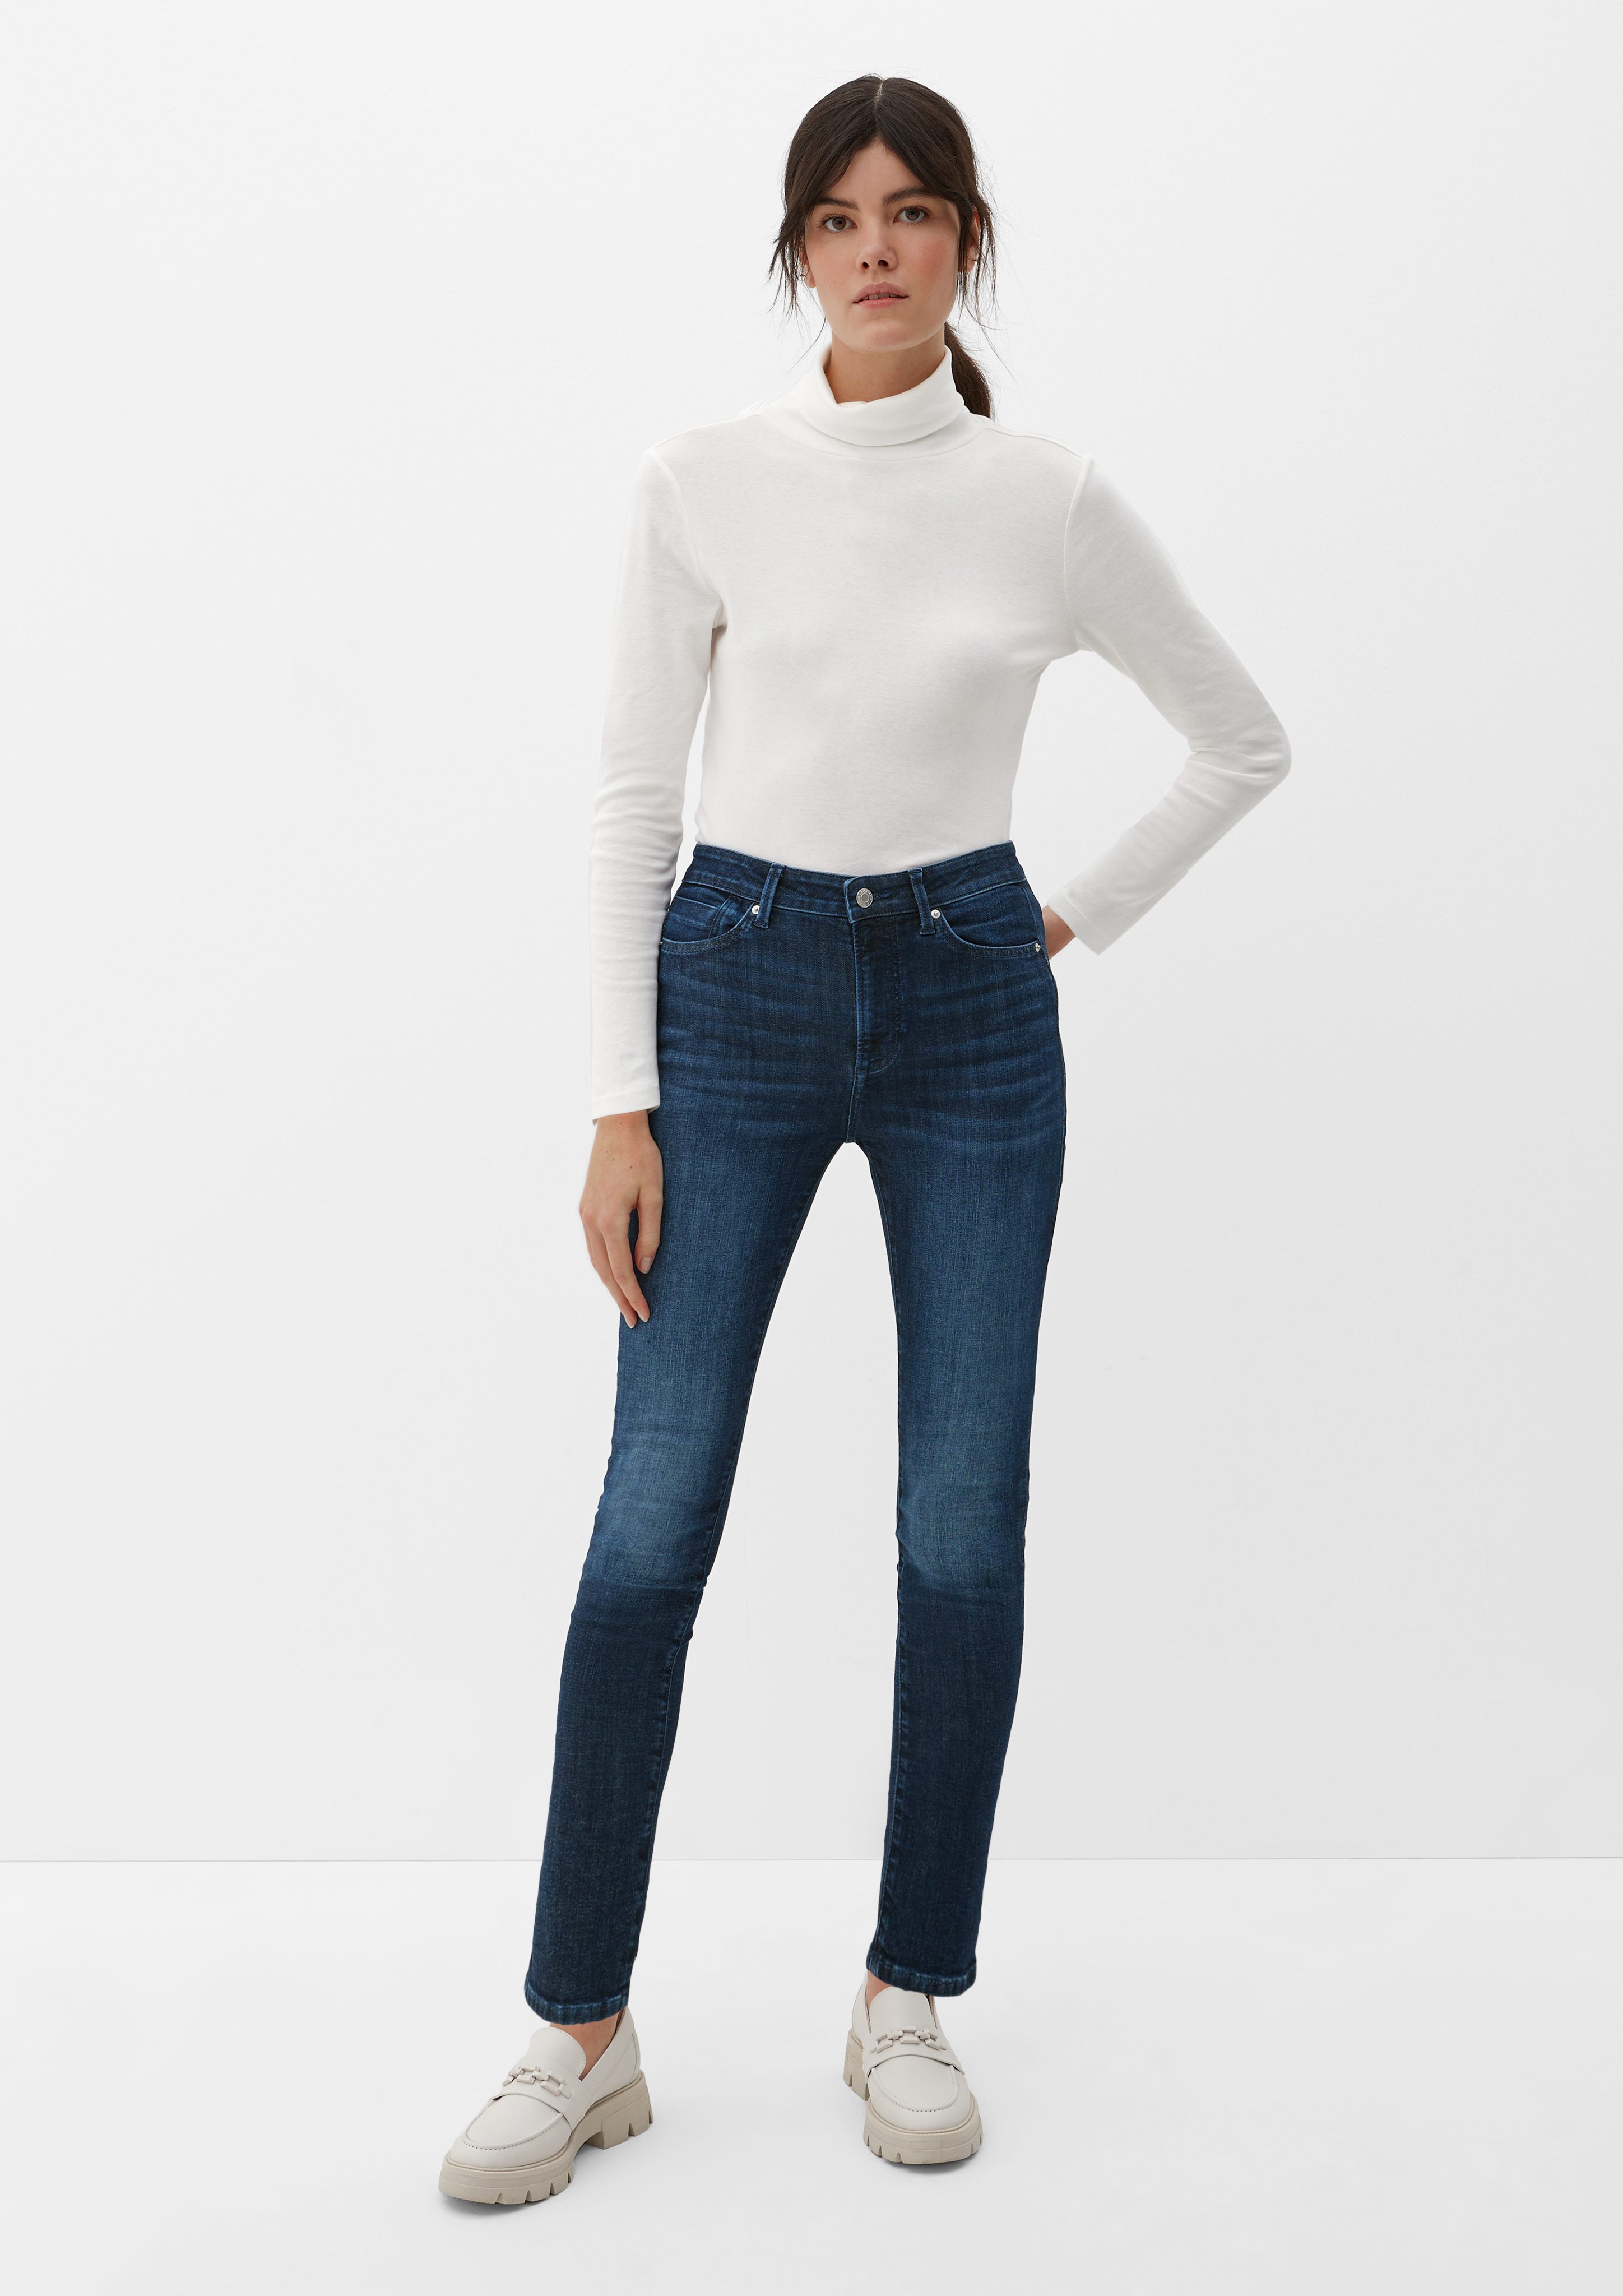 / Leg dunkelblau / s.Oliver Skinny Skinny Jeans Waschung Rise Izabell / Fit High 5-Pocket-Jeans